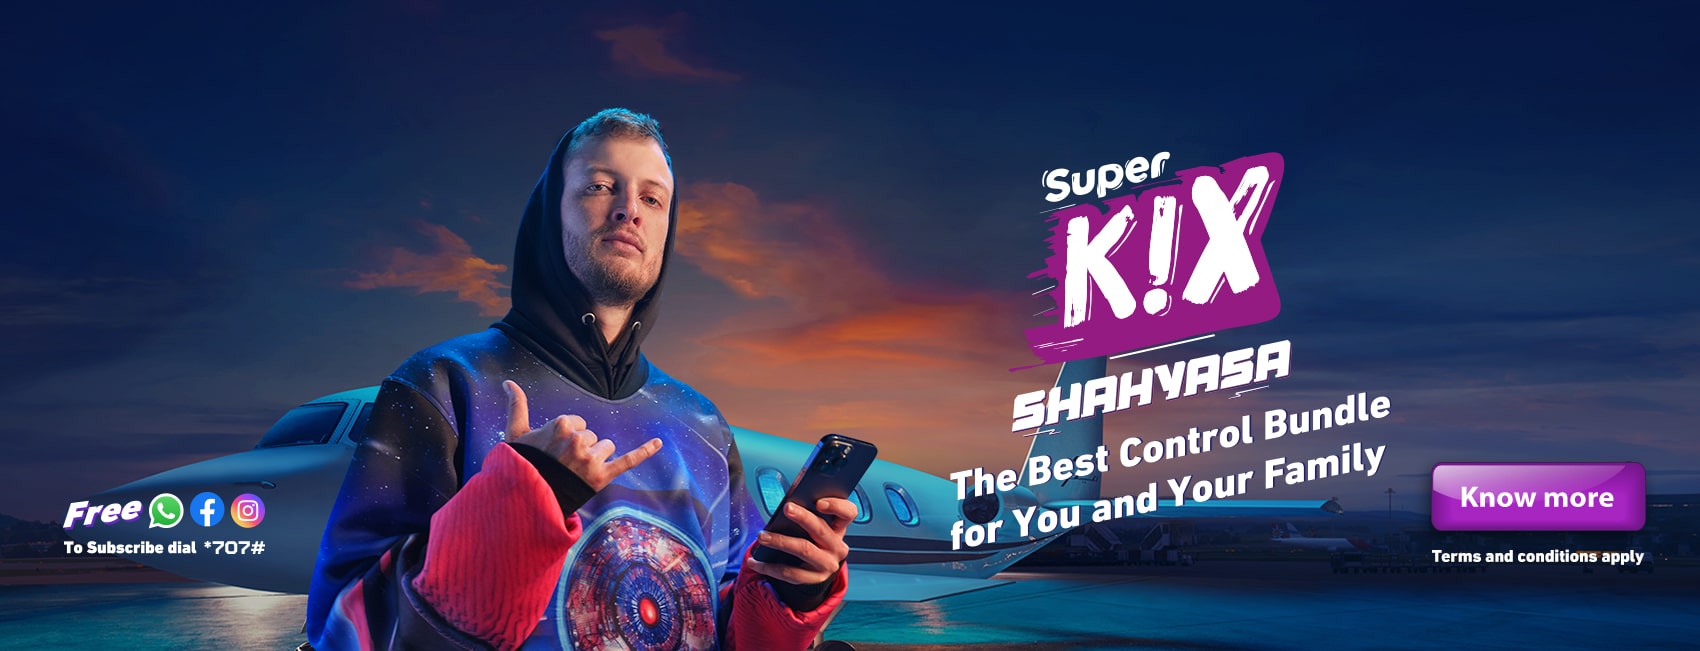 Super Kix Shahyasa